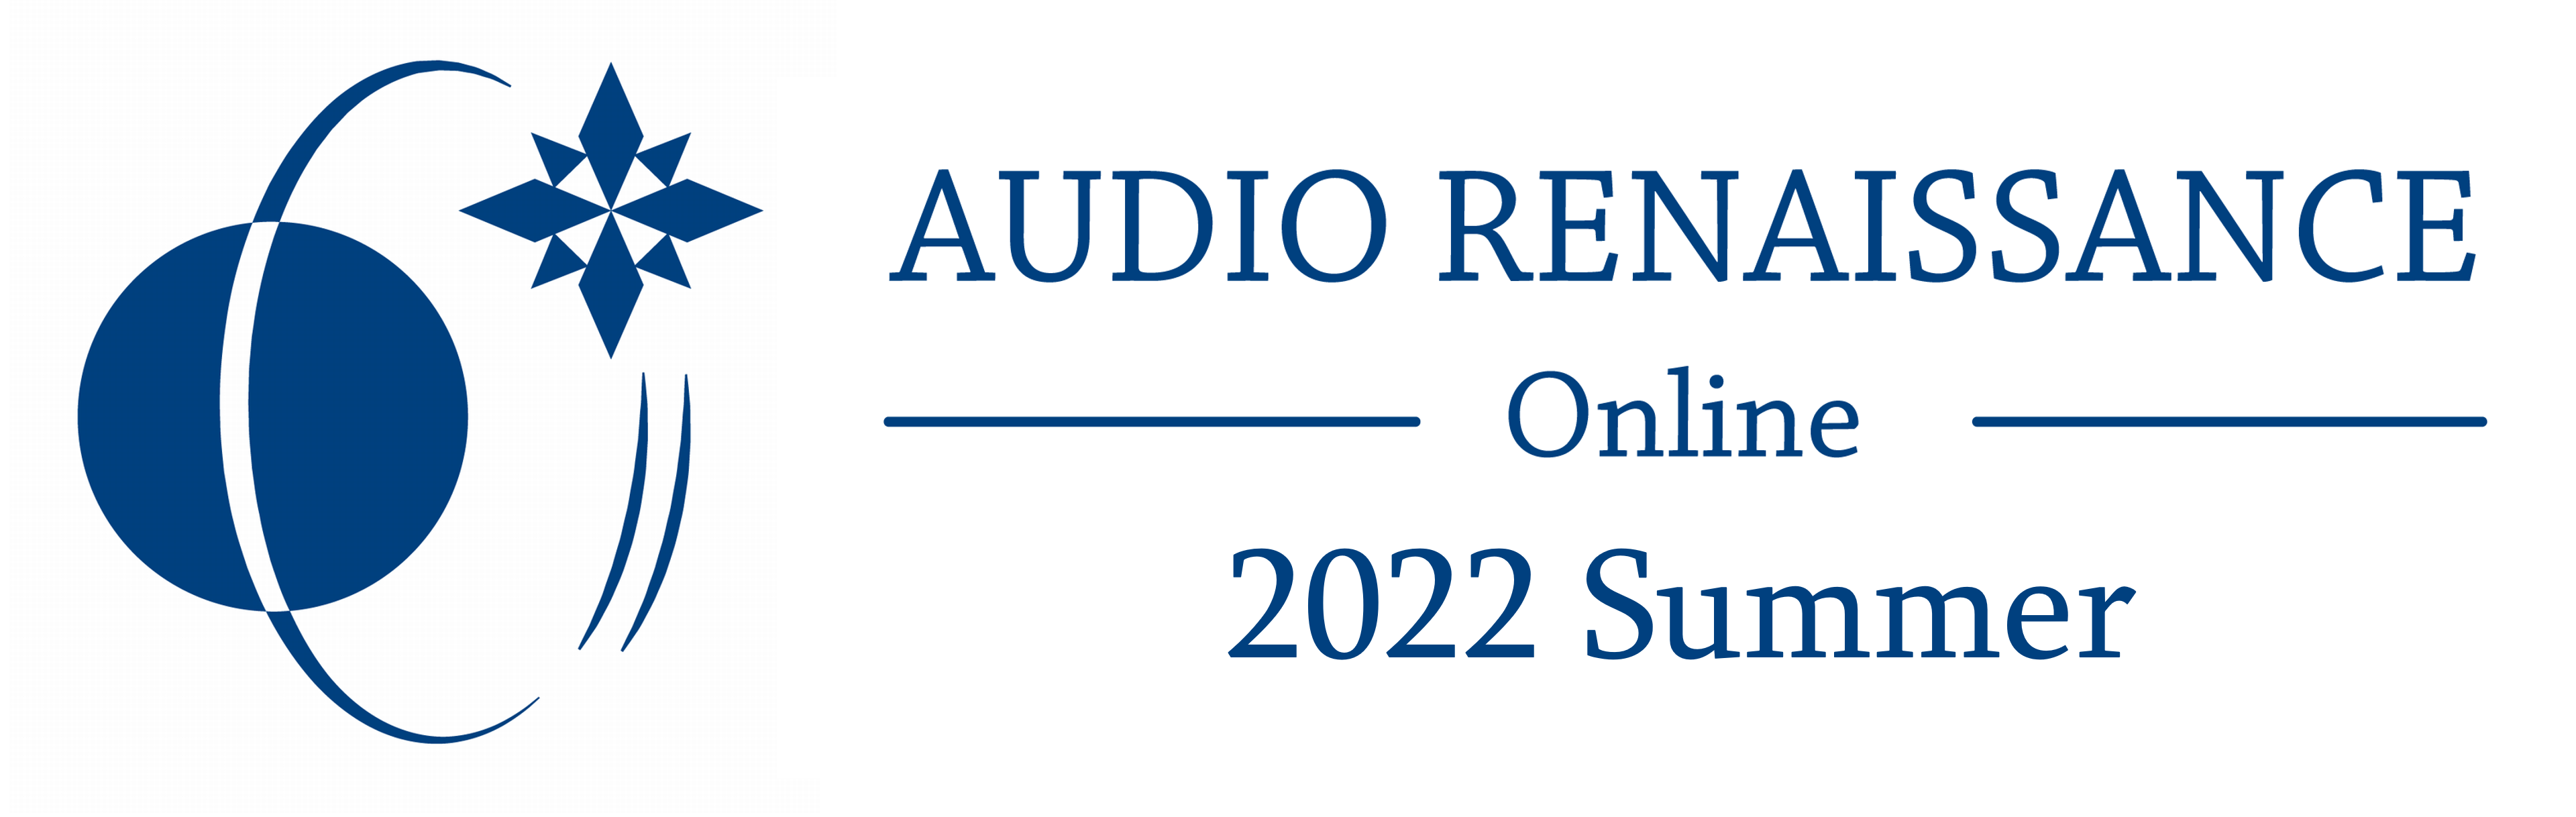 Audio Renaissance Online 2022 Summer